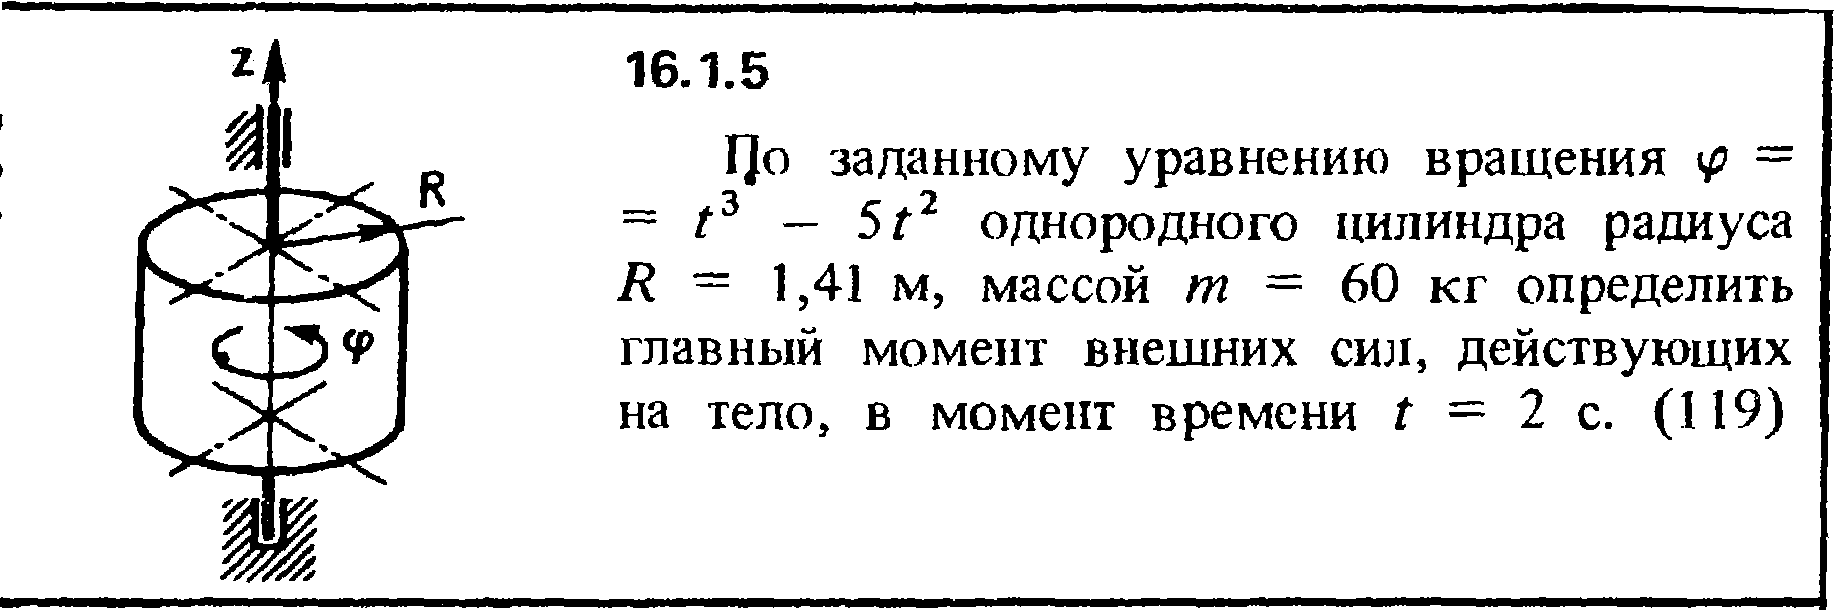 Решение задачи 16.1.5 из сборника Кепе О.Е. 1989 года